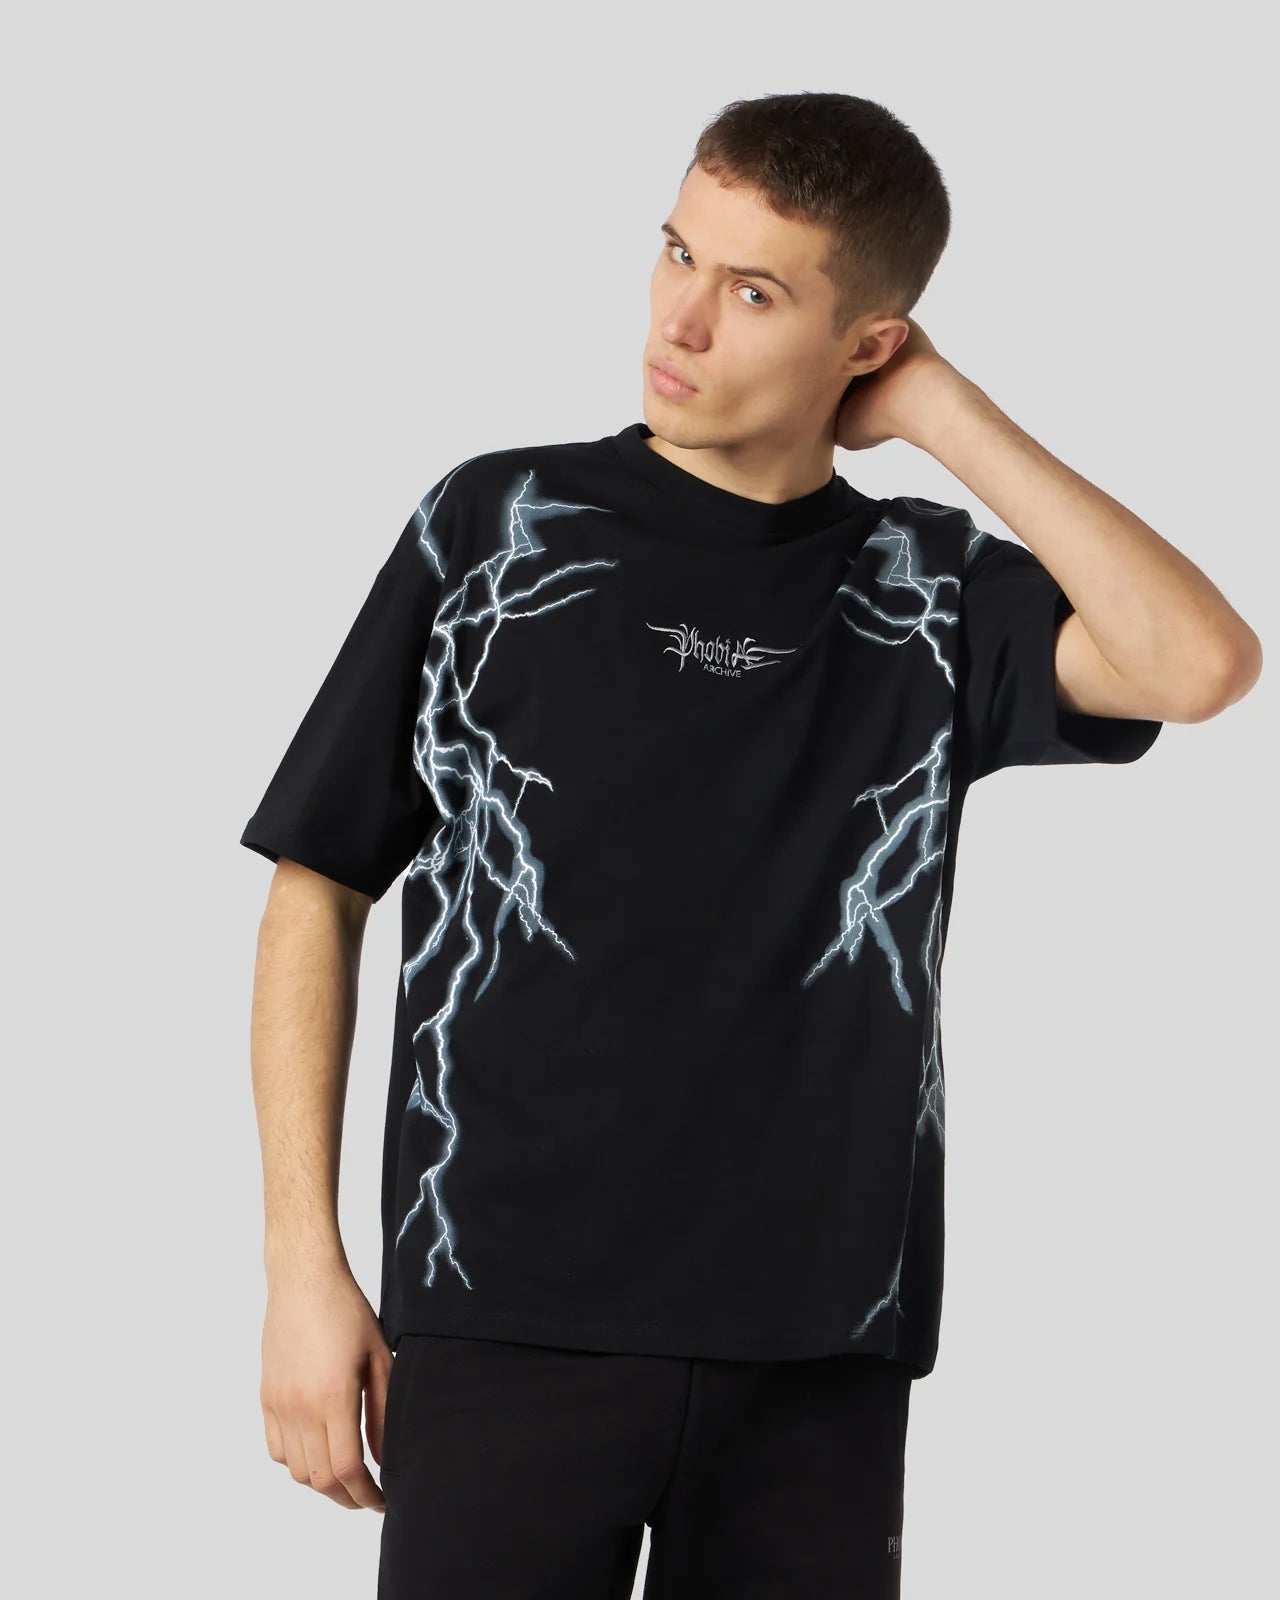 T-shirt Phobia nera fulmini laterali in stampa  bianca e logo ricamato